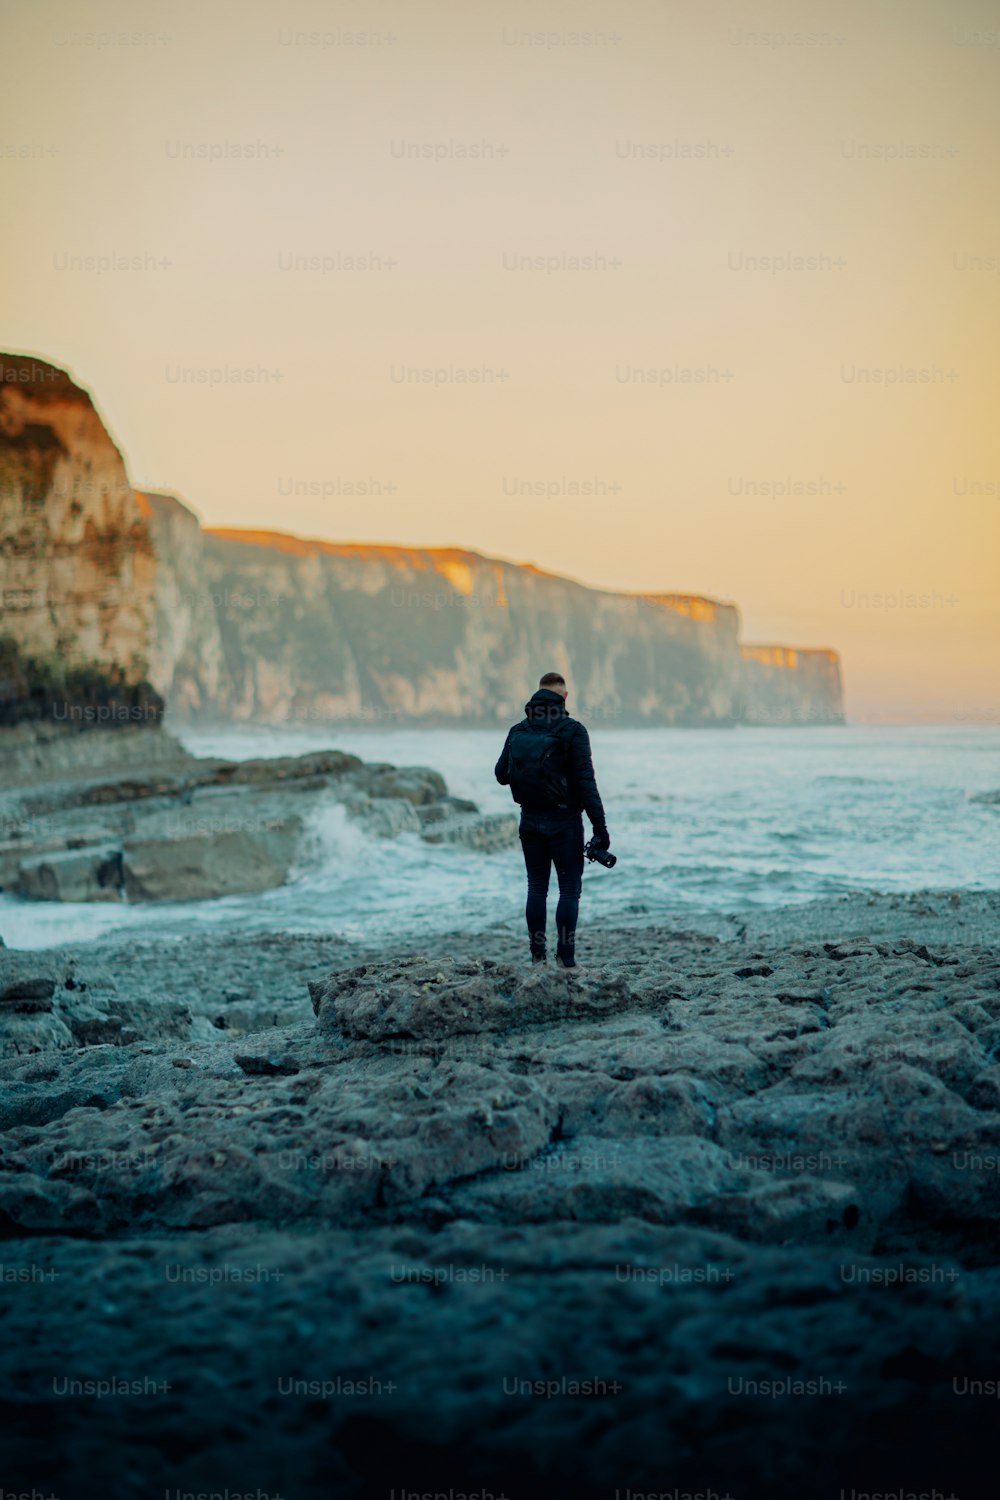 a man walking along a rocky beach next to the ocean